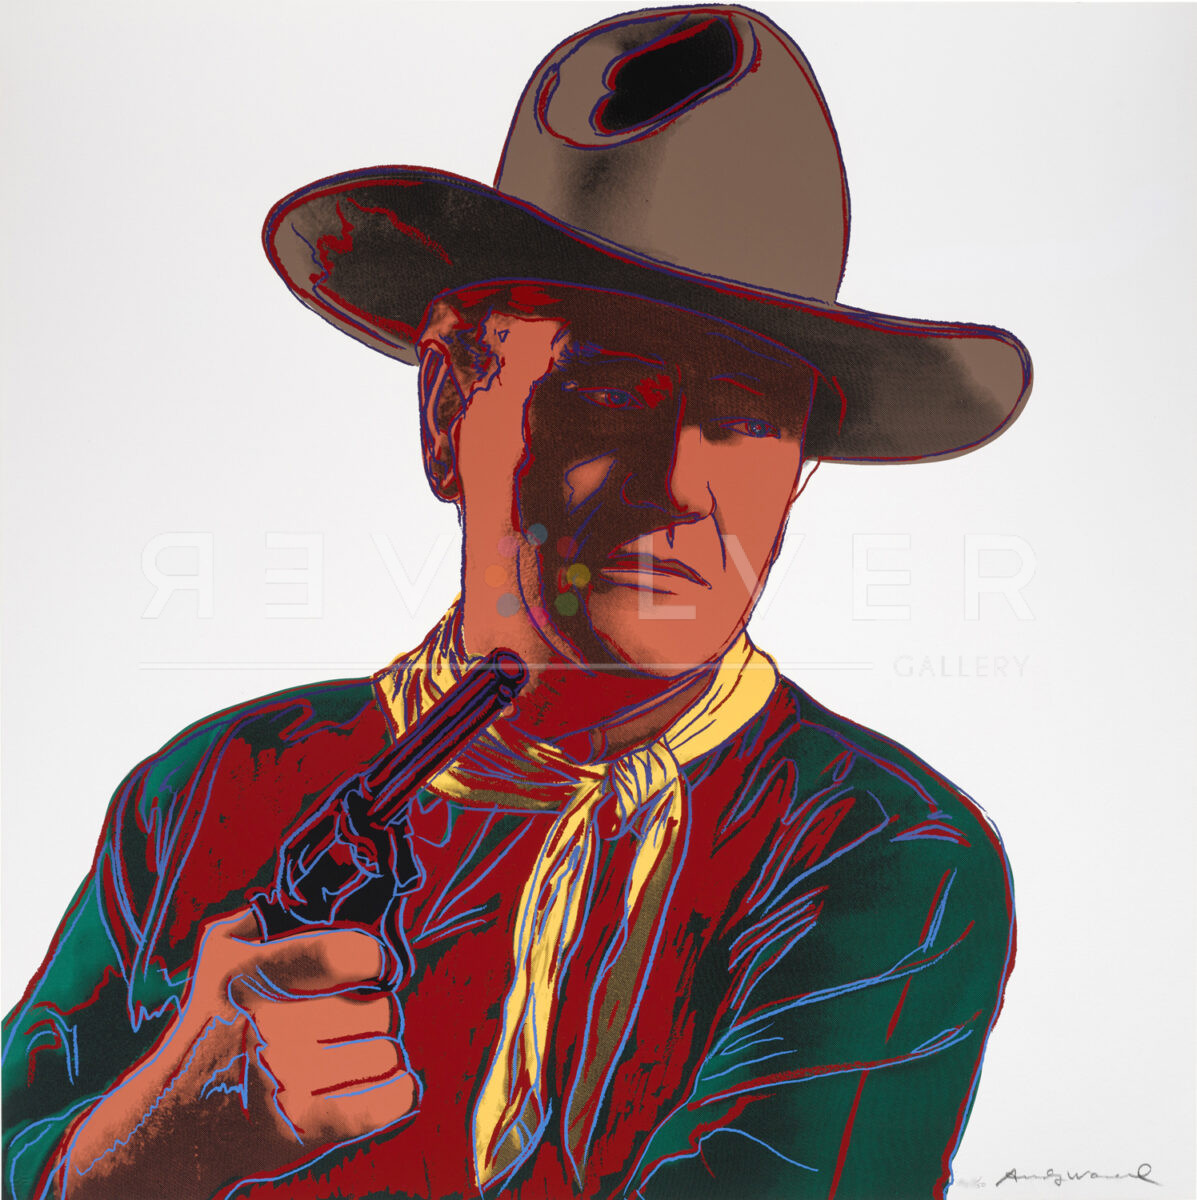 John Wayne by Andy Warhol